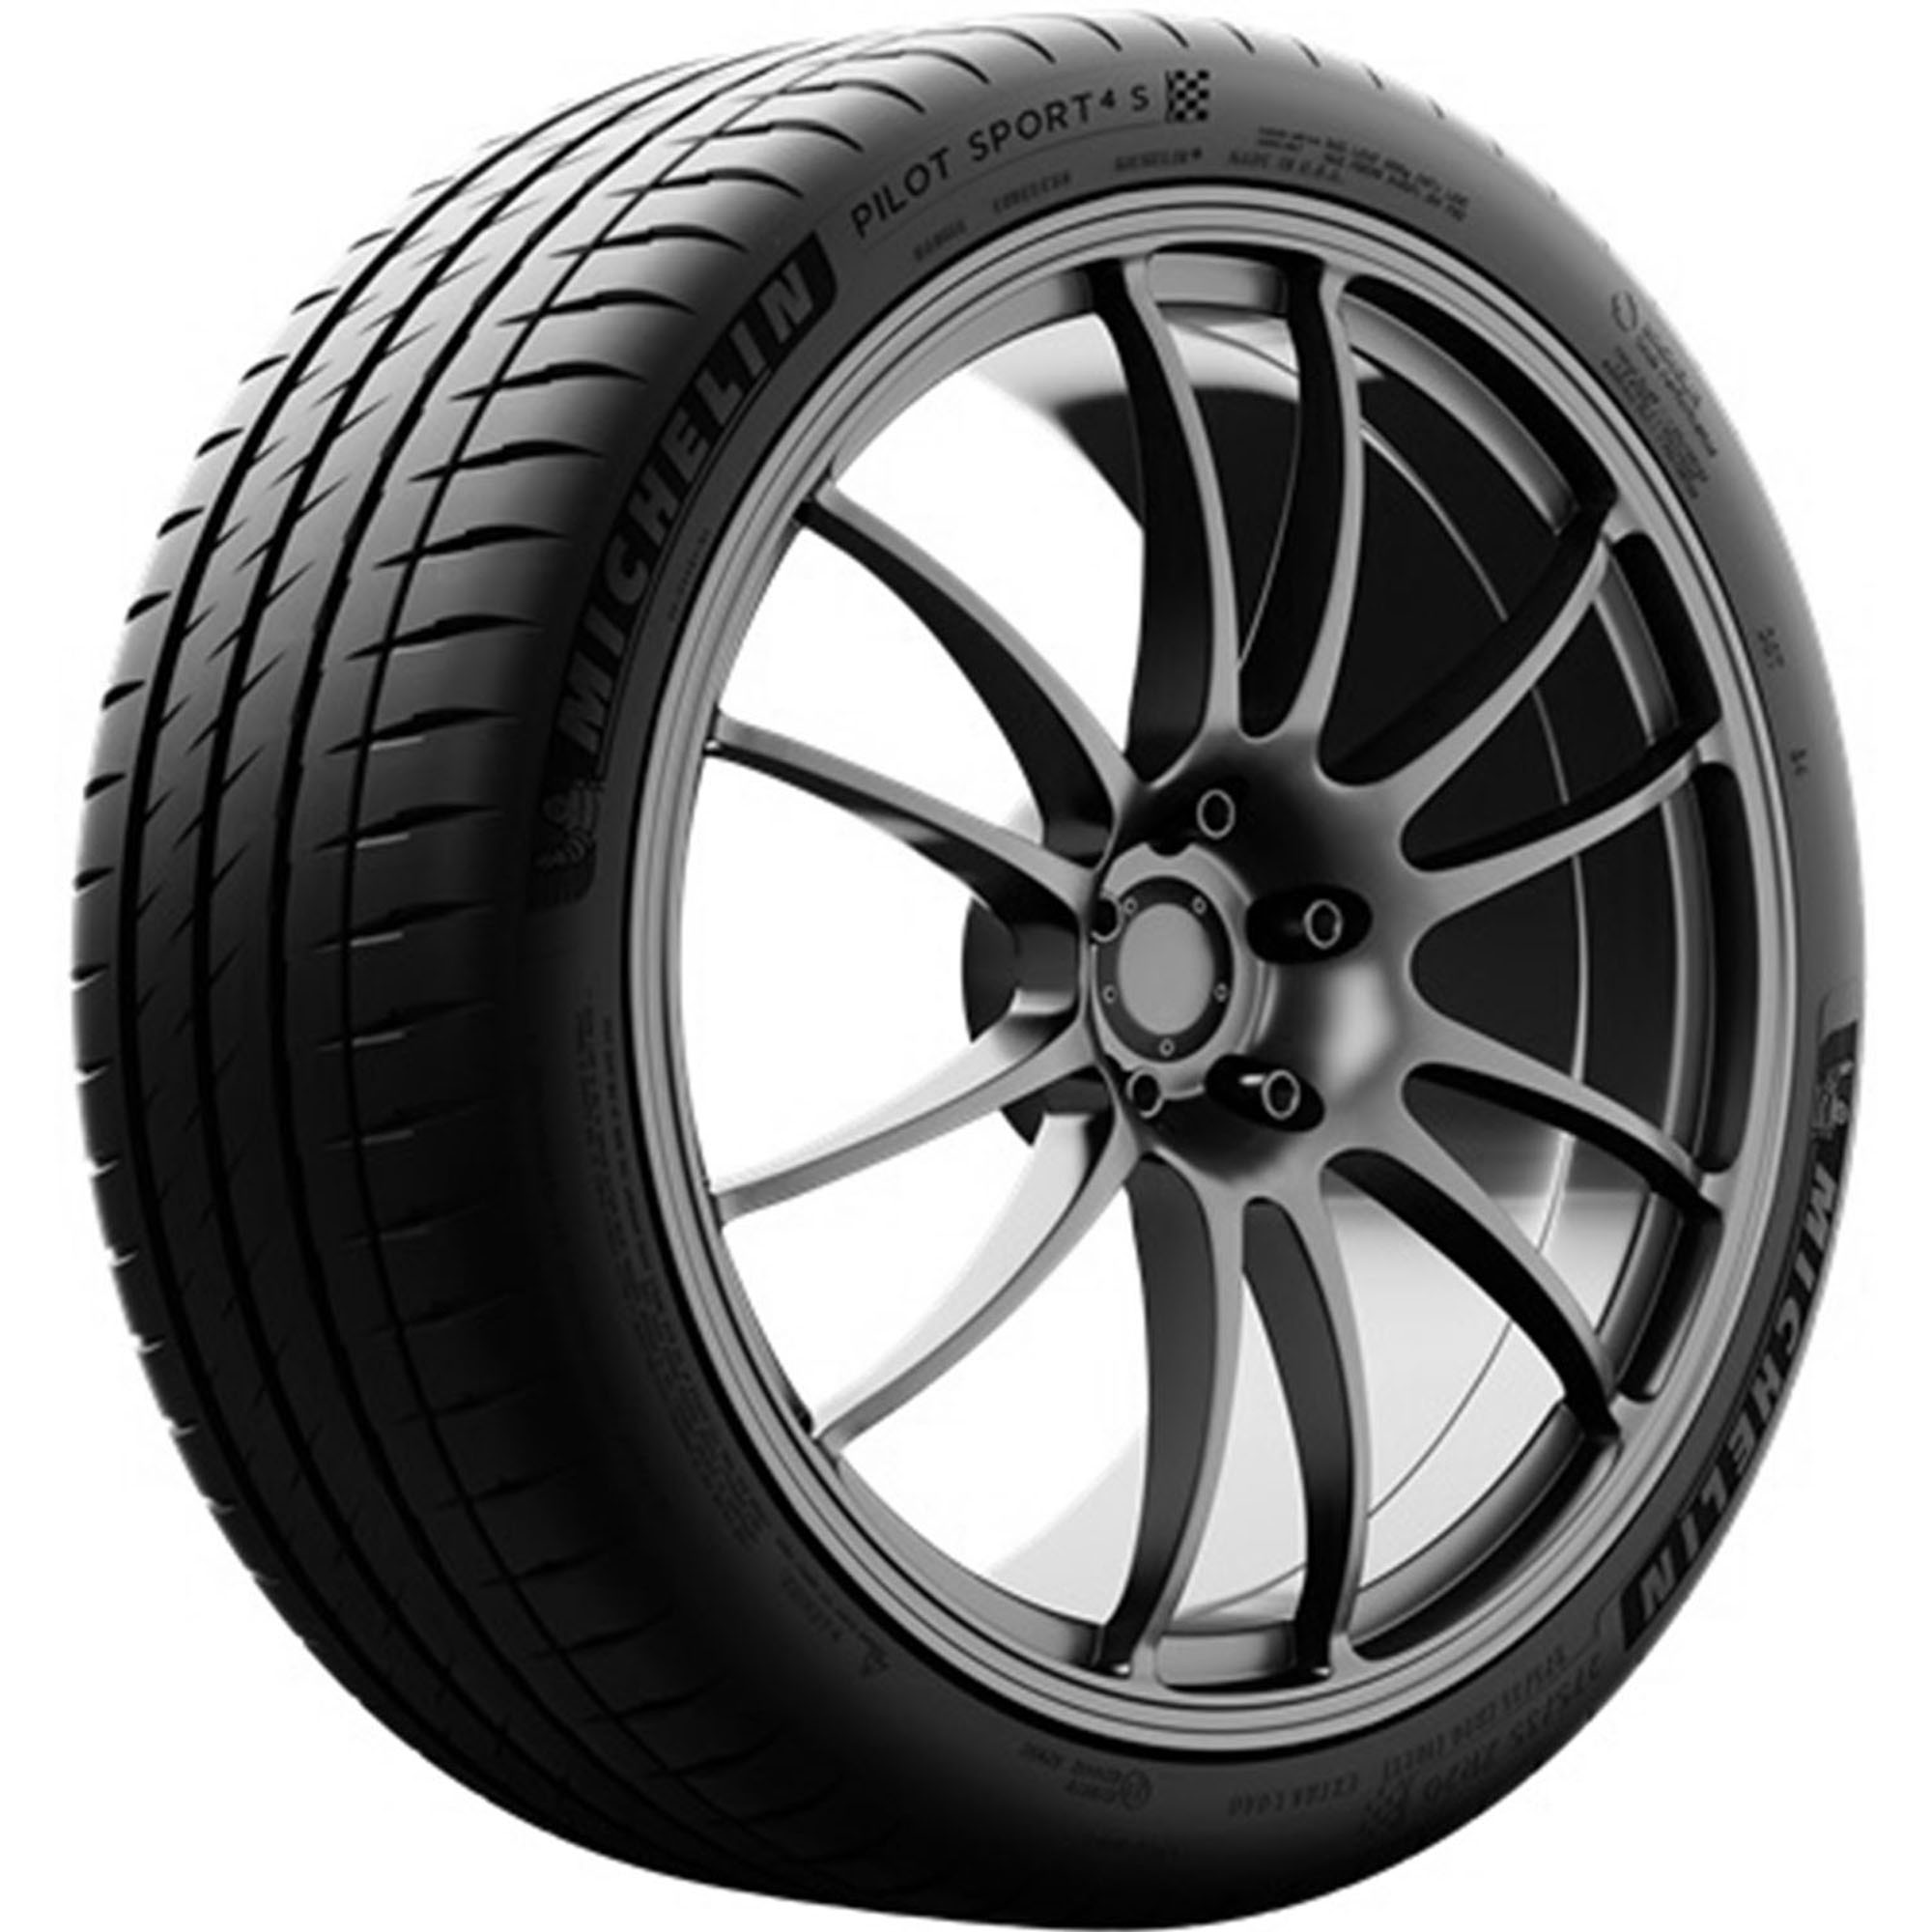 Michelin Pilot Sport 4S Performance 265/35ZR18 (97Y) XL Passenger Tire - image 1 of 4